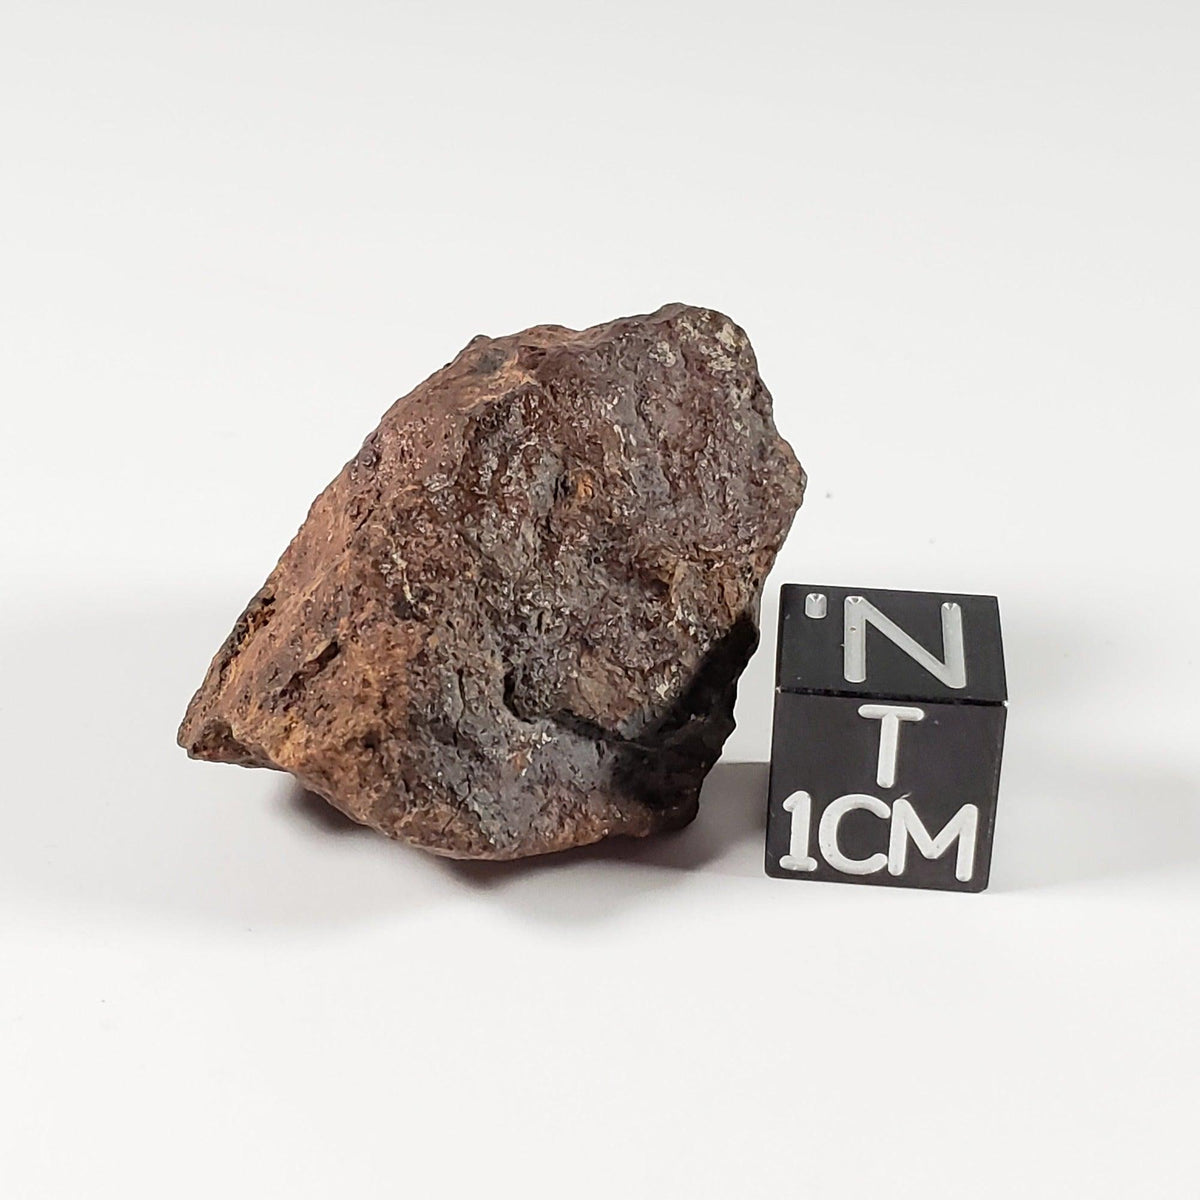 Gold Basin Meteorite | 21.43 Grams | Individual | L4 Chondrite | Arizona | Canagem.com